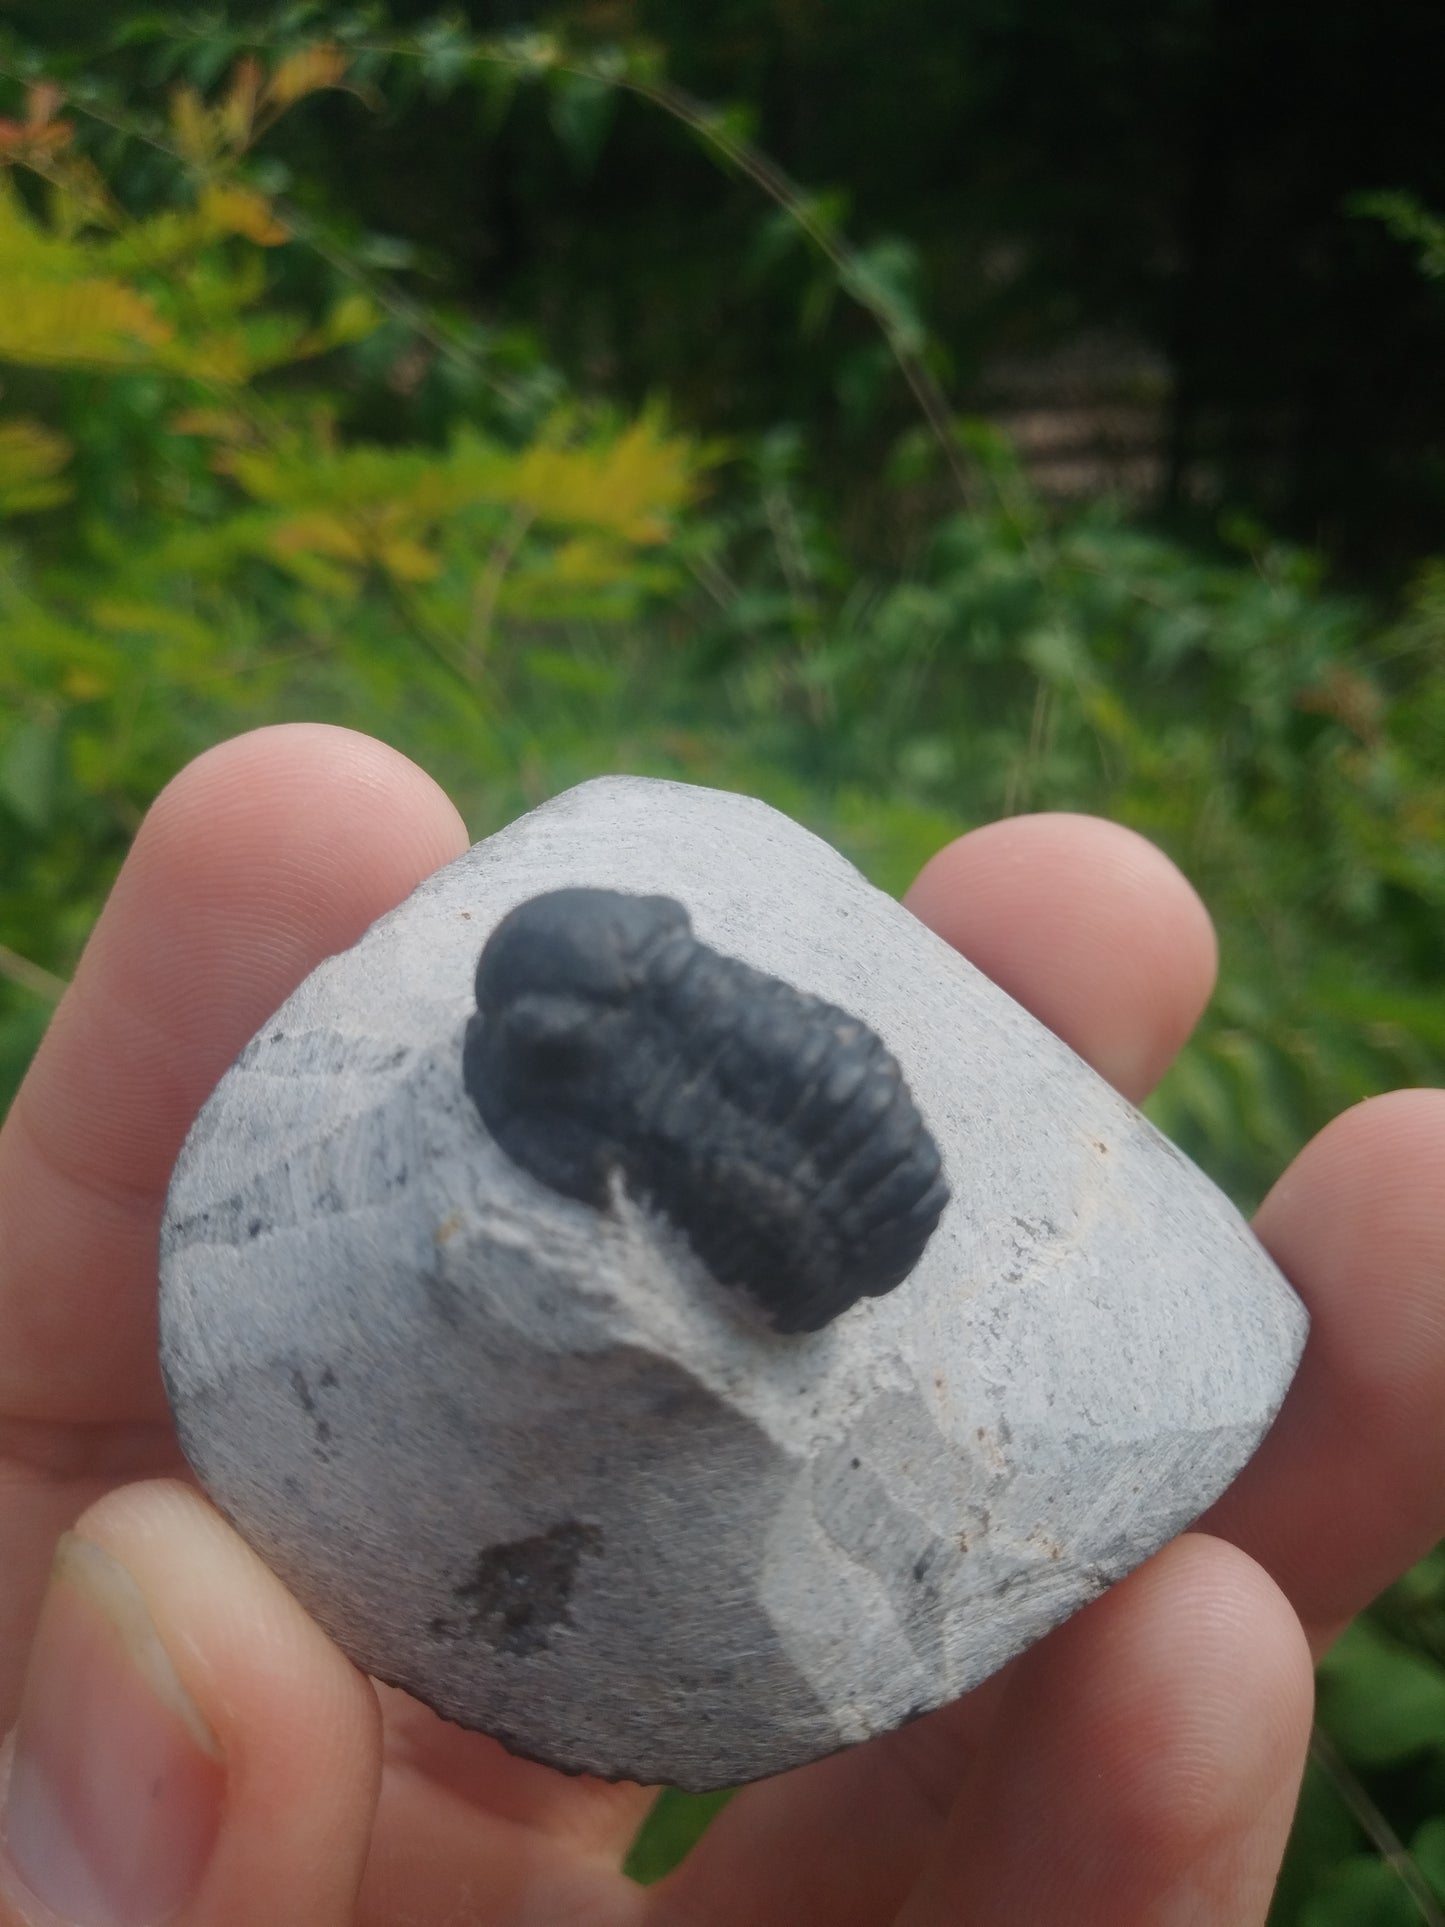 Trilobite Gerastos sp - Devonian